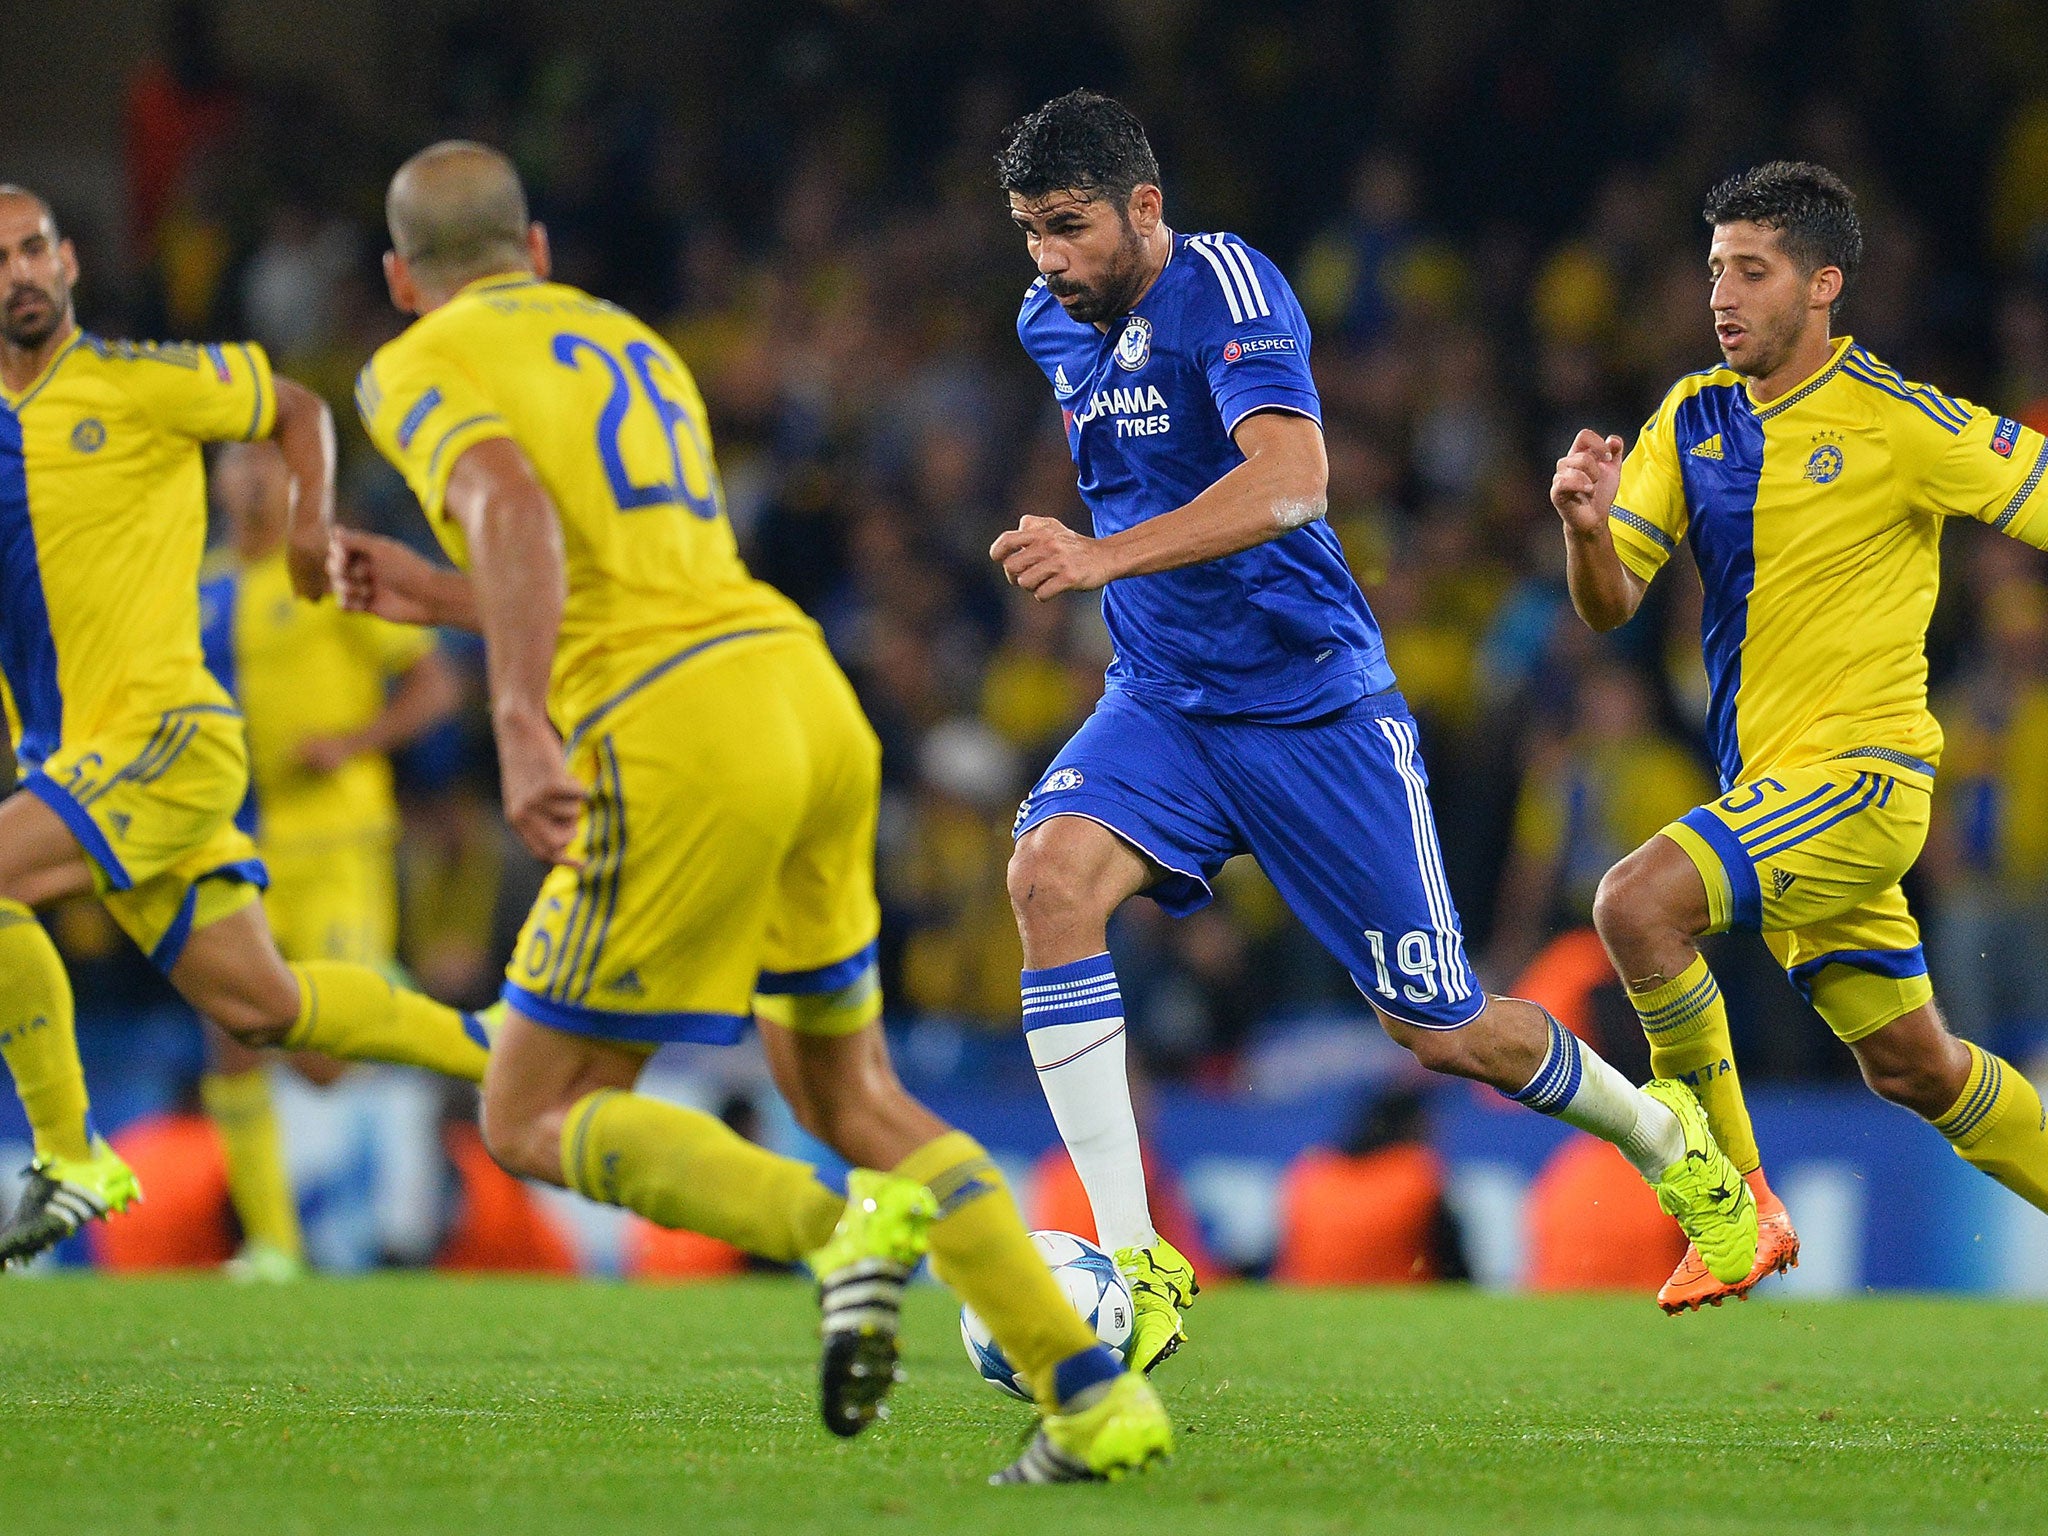 Diego Costa in action against Maccabi Tel-Aviv in September